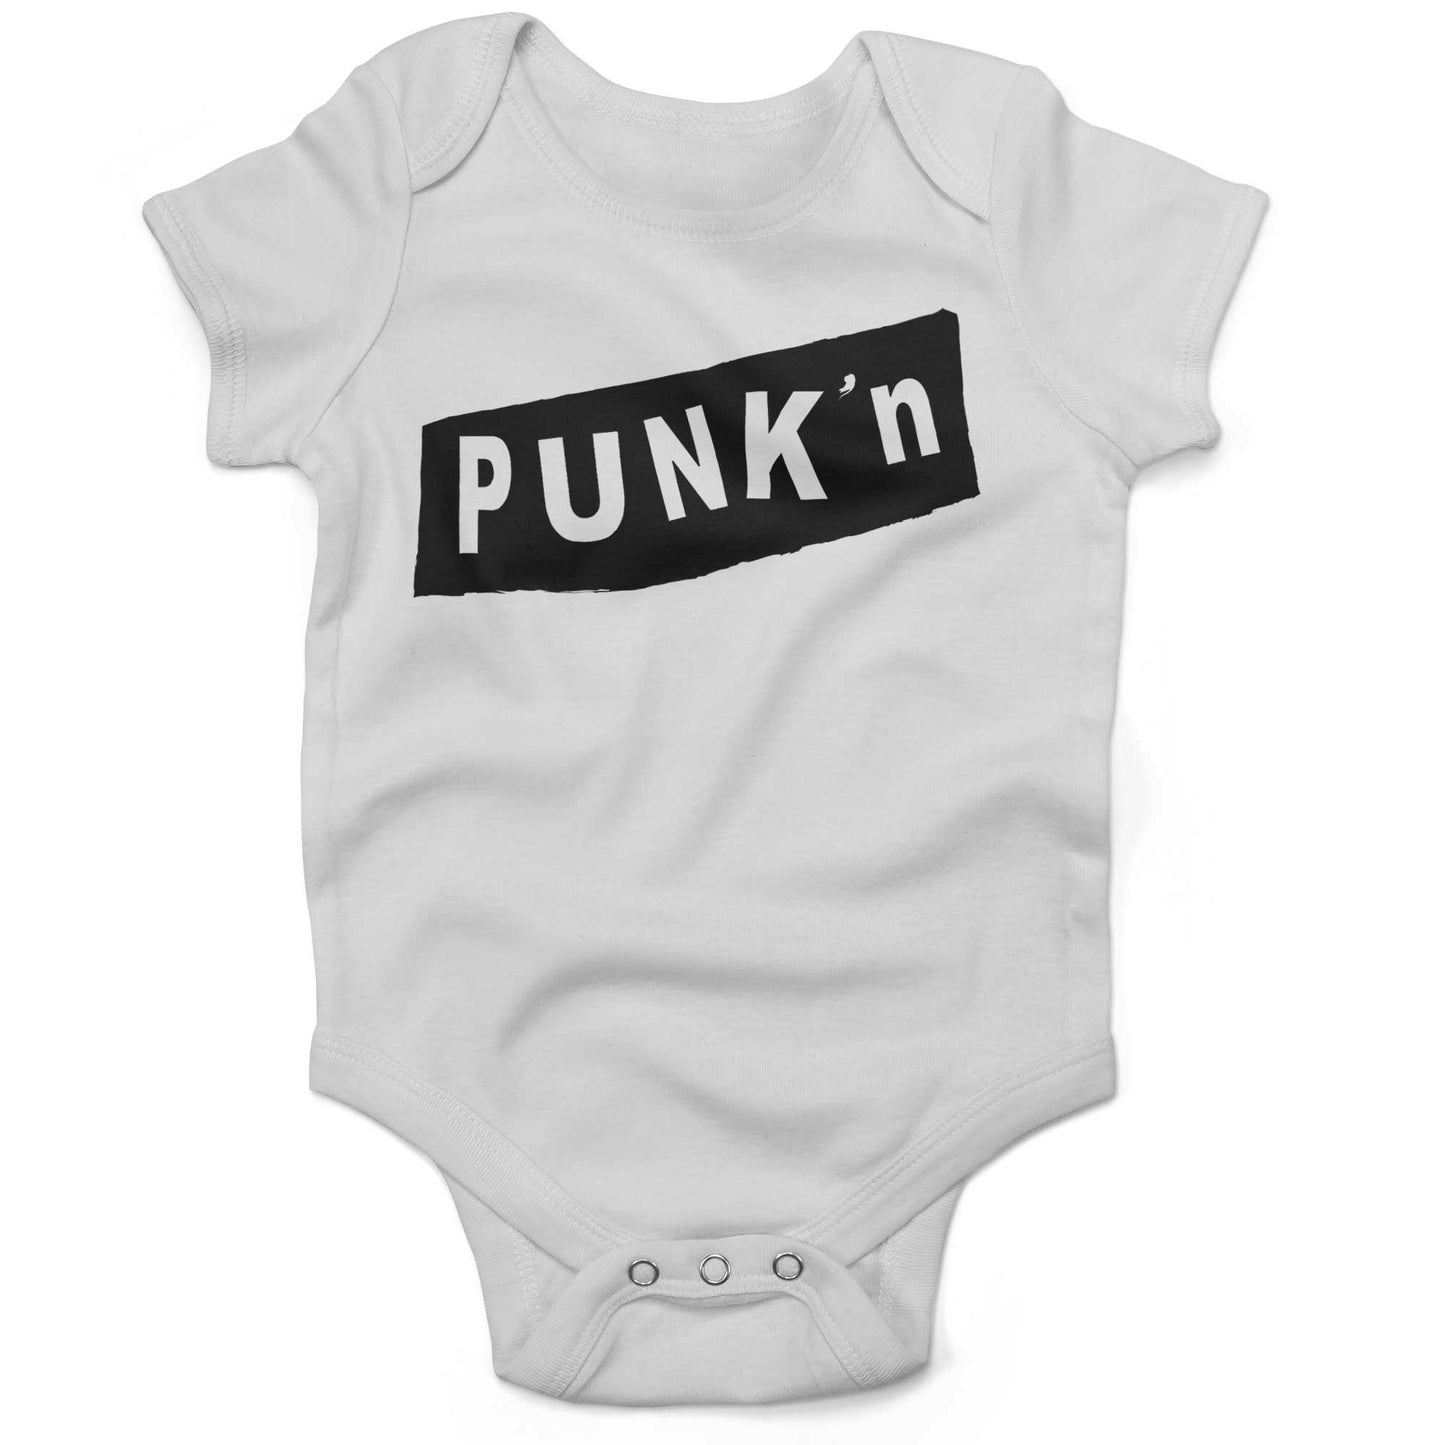 Pumpkin Punk'n Infant Bodysuit or Raglan Tee-White-3-6 months